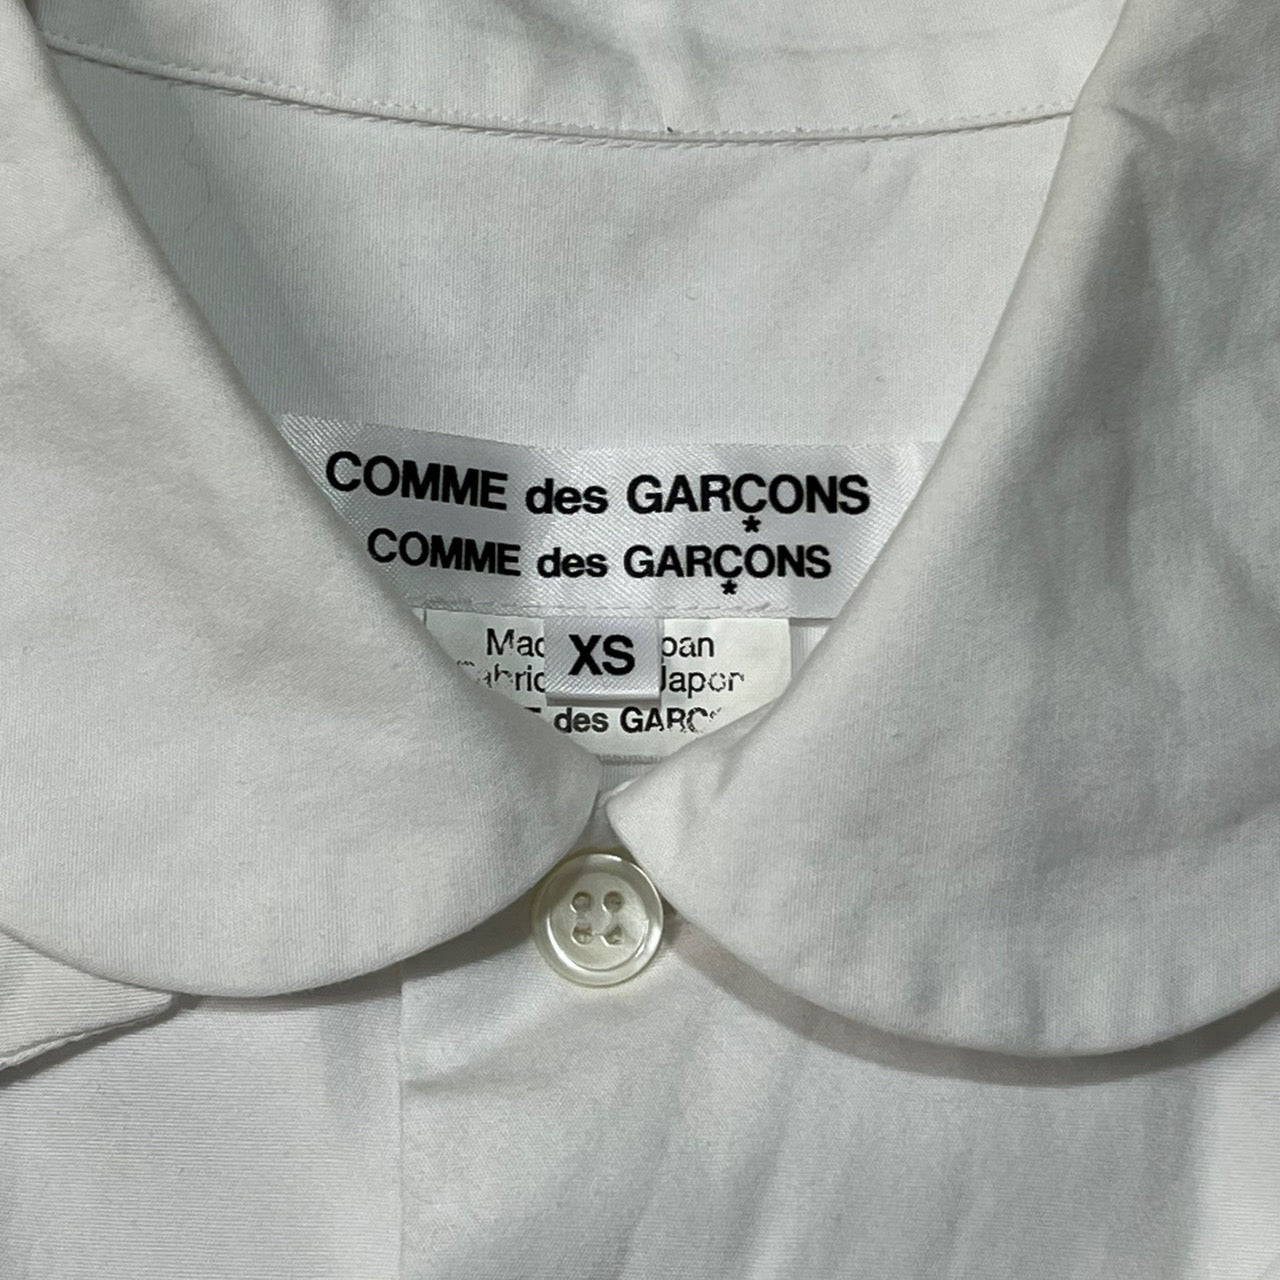 COMME des GARCONS COMME des GARCONS(コムデギャルソンコムデギャルソン) 17AW random ruffle shirt/ランダムフリル丸襟シャツ/ブラウス RT-B010 XS ホワイト